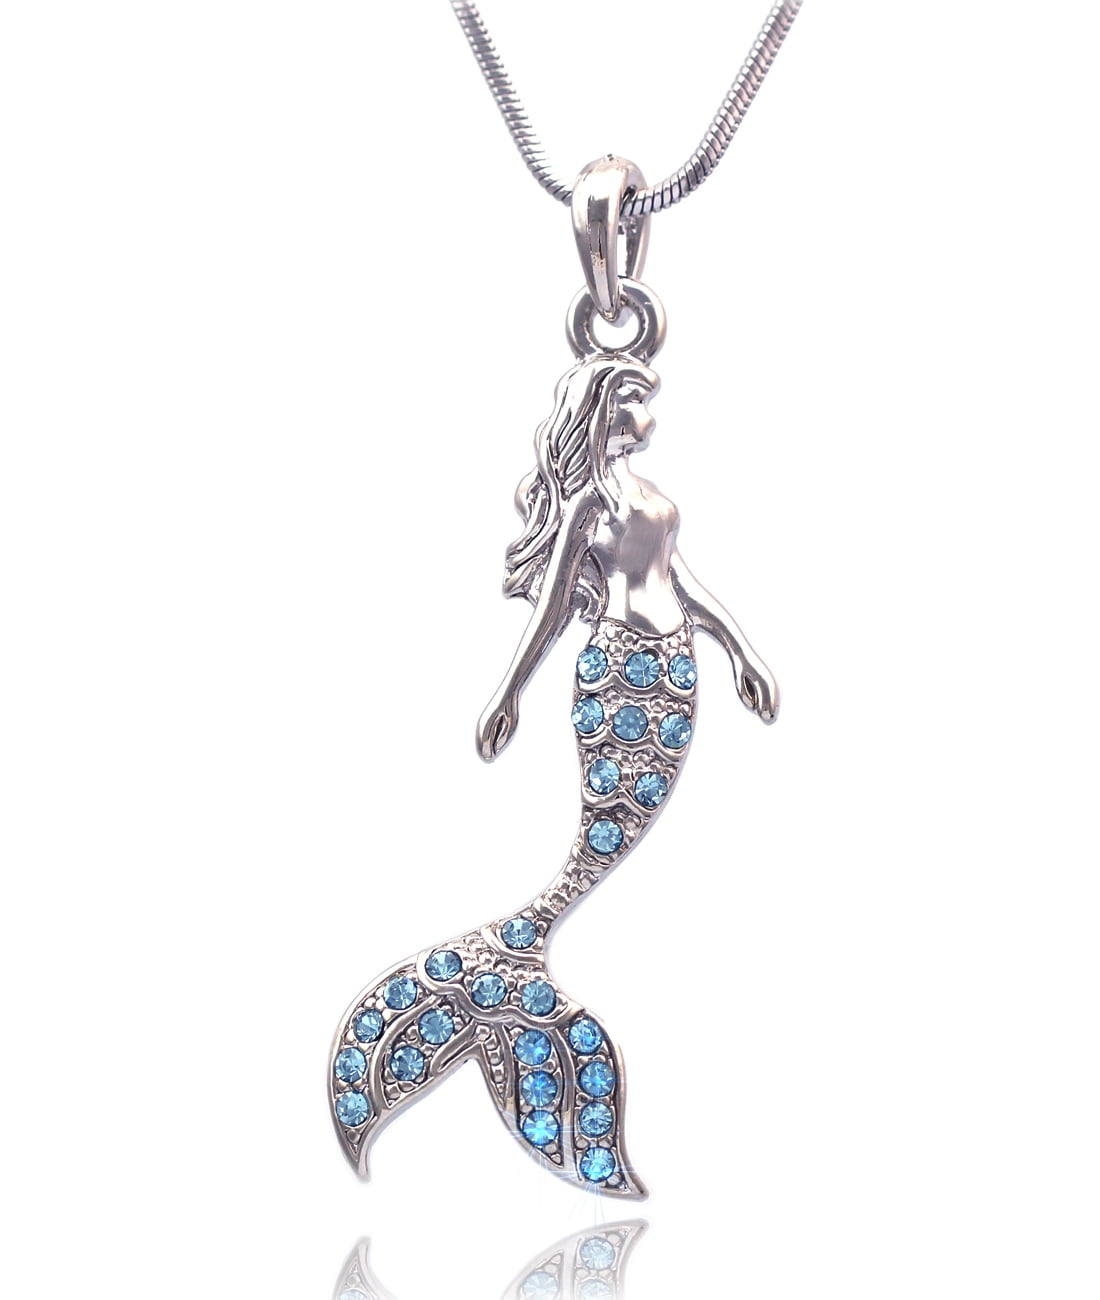 cocojewelry Fairytale Mermaid Pendant Necklace Jewelry Gift Box ...